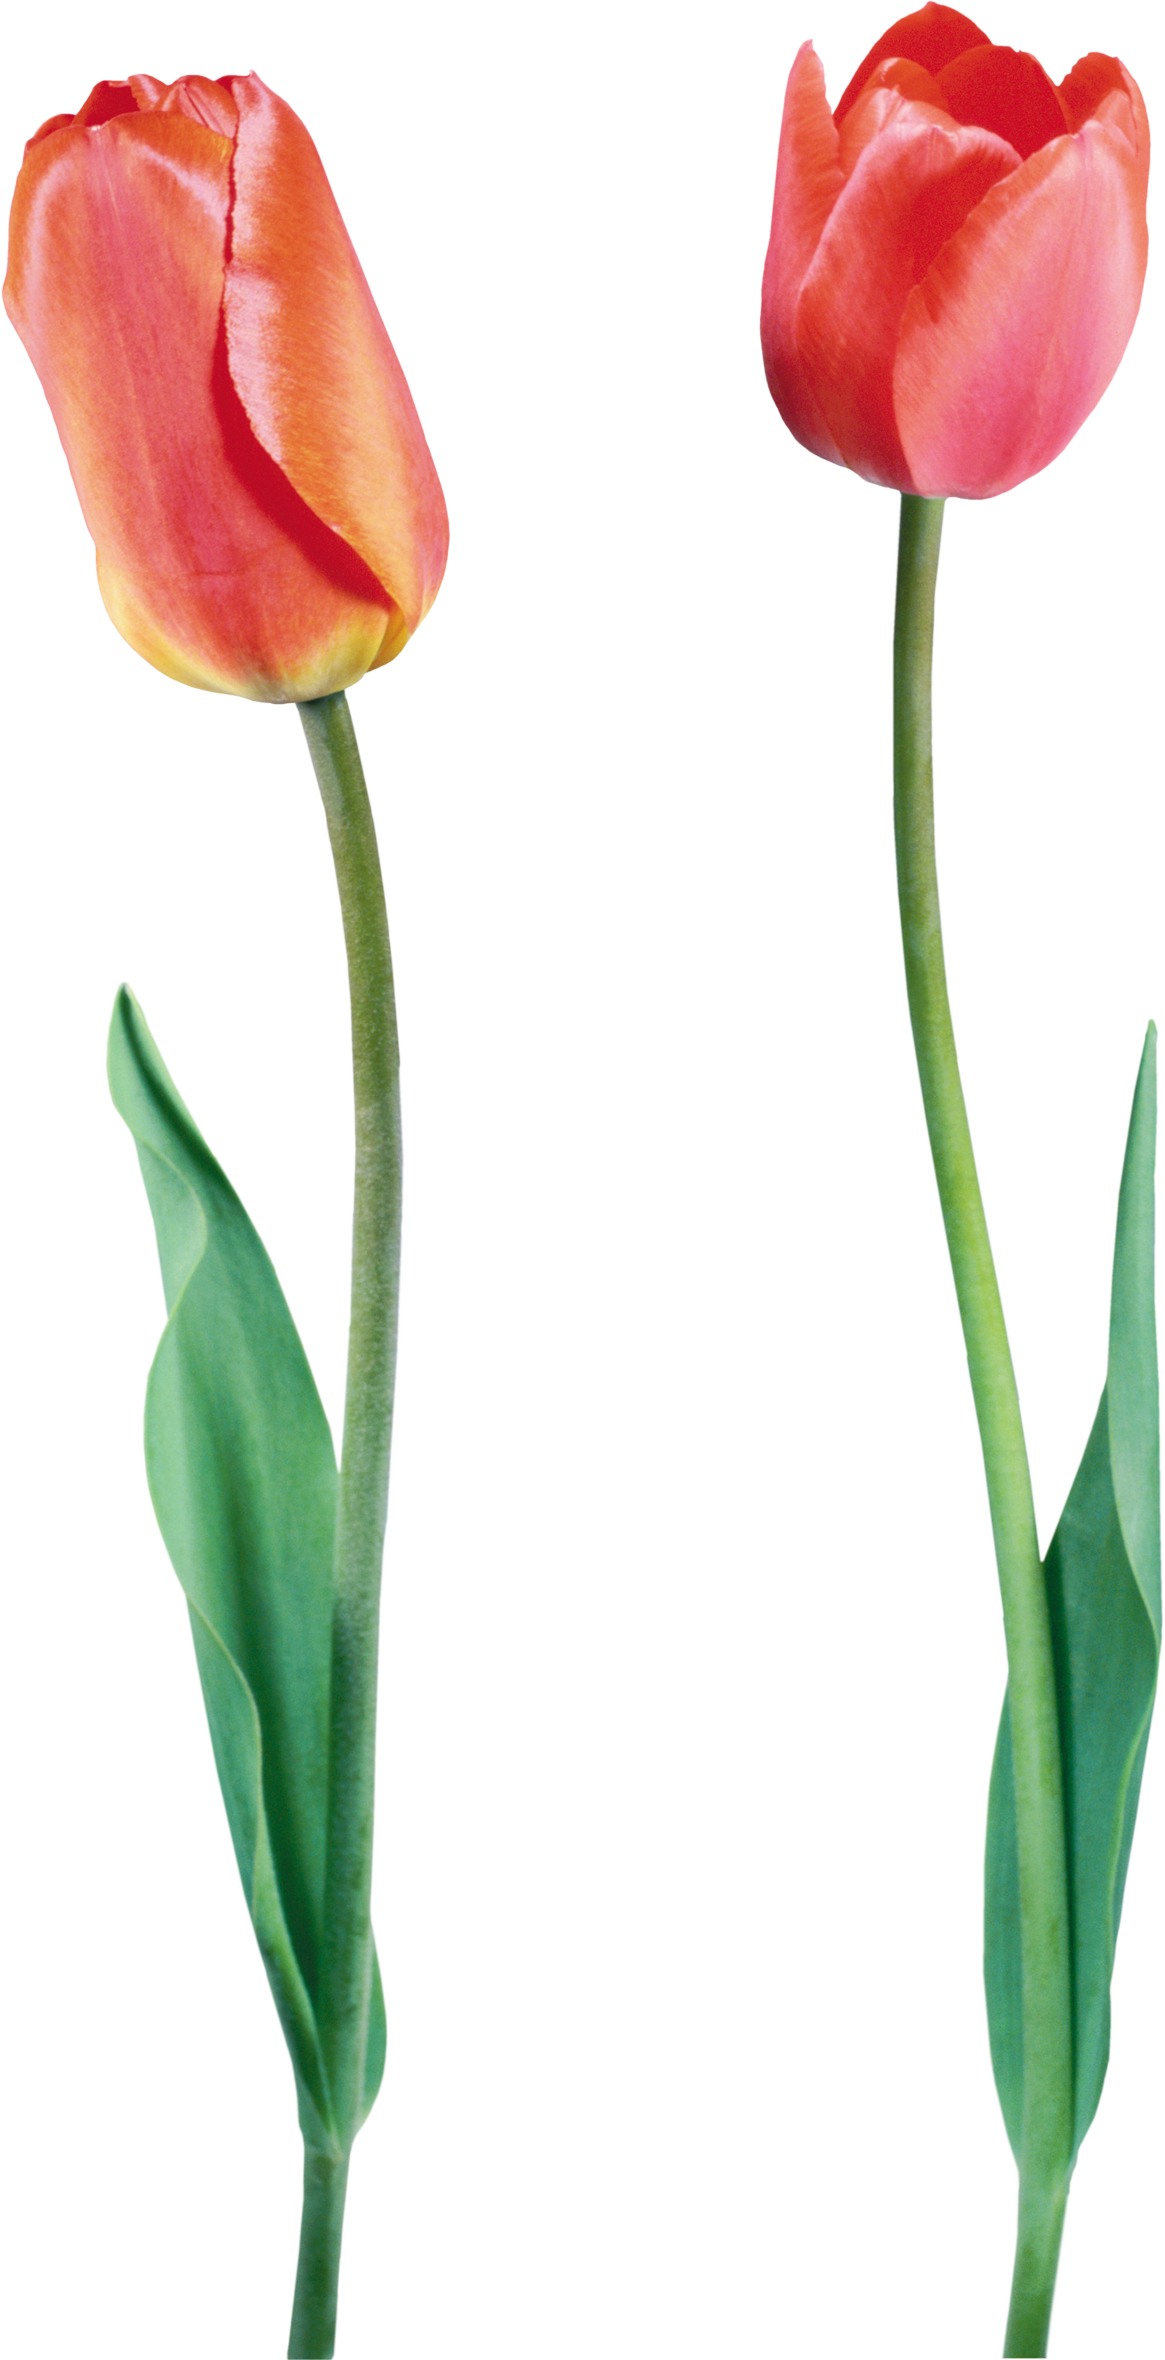 Tulips,тюльпаны